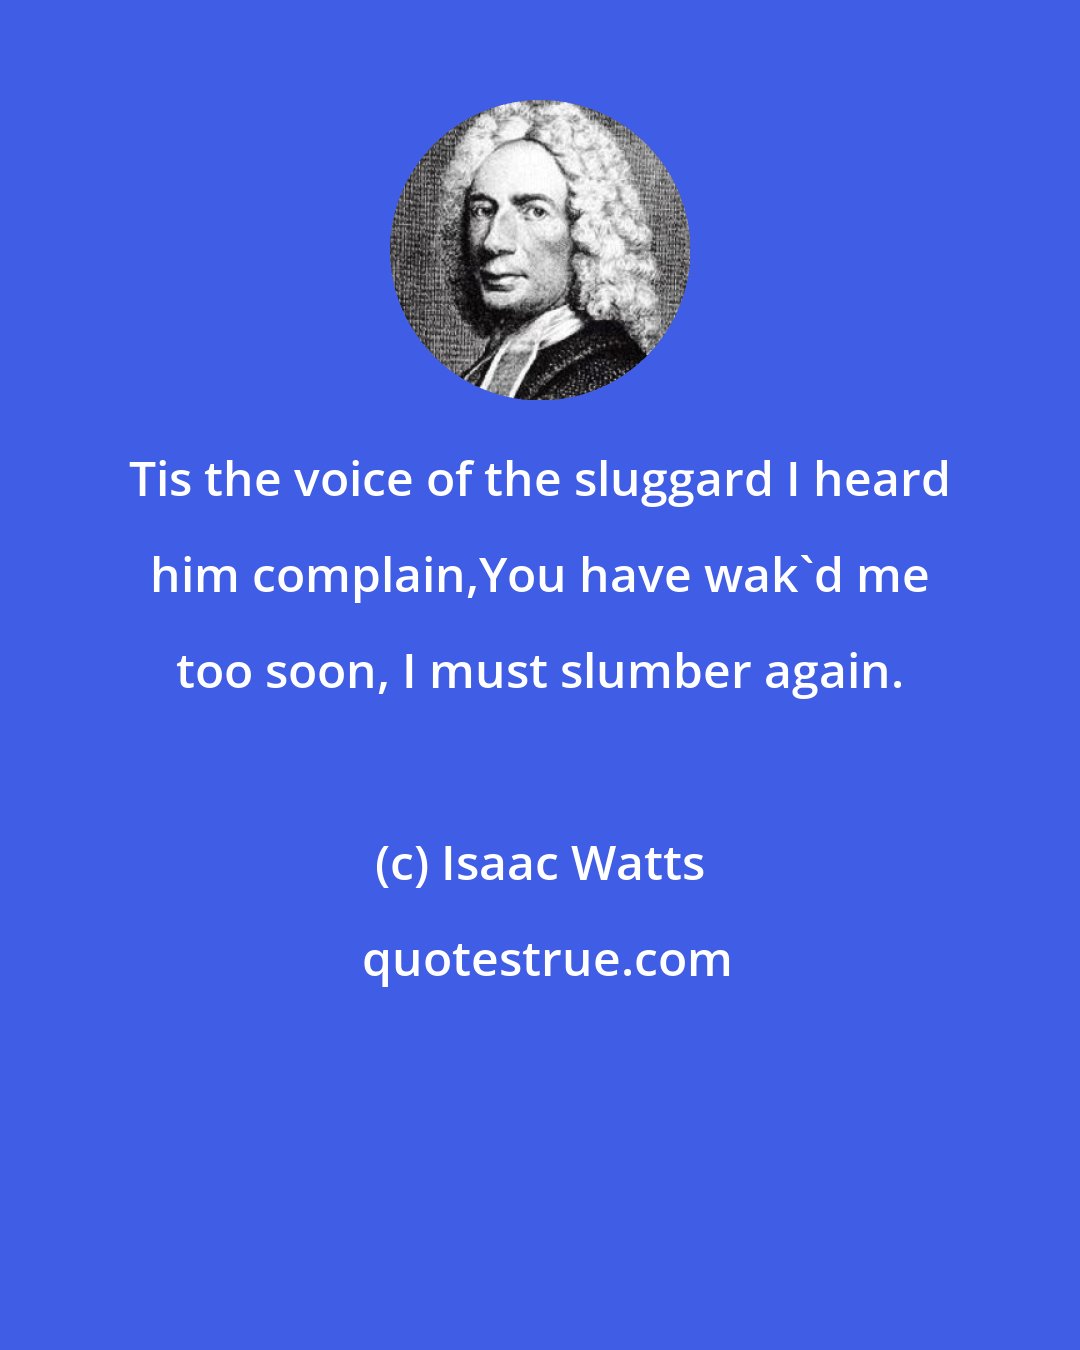 Isaac Watts: Tis the voice of the sluggard I heard him complain,You have wak'd me too soon, I must slumber again.